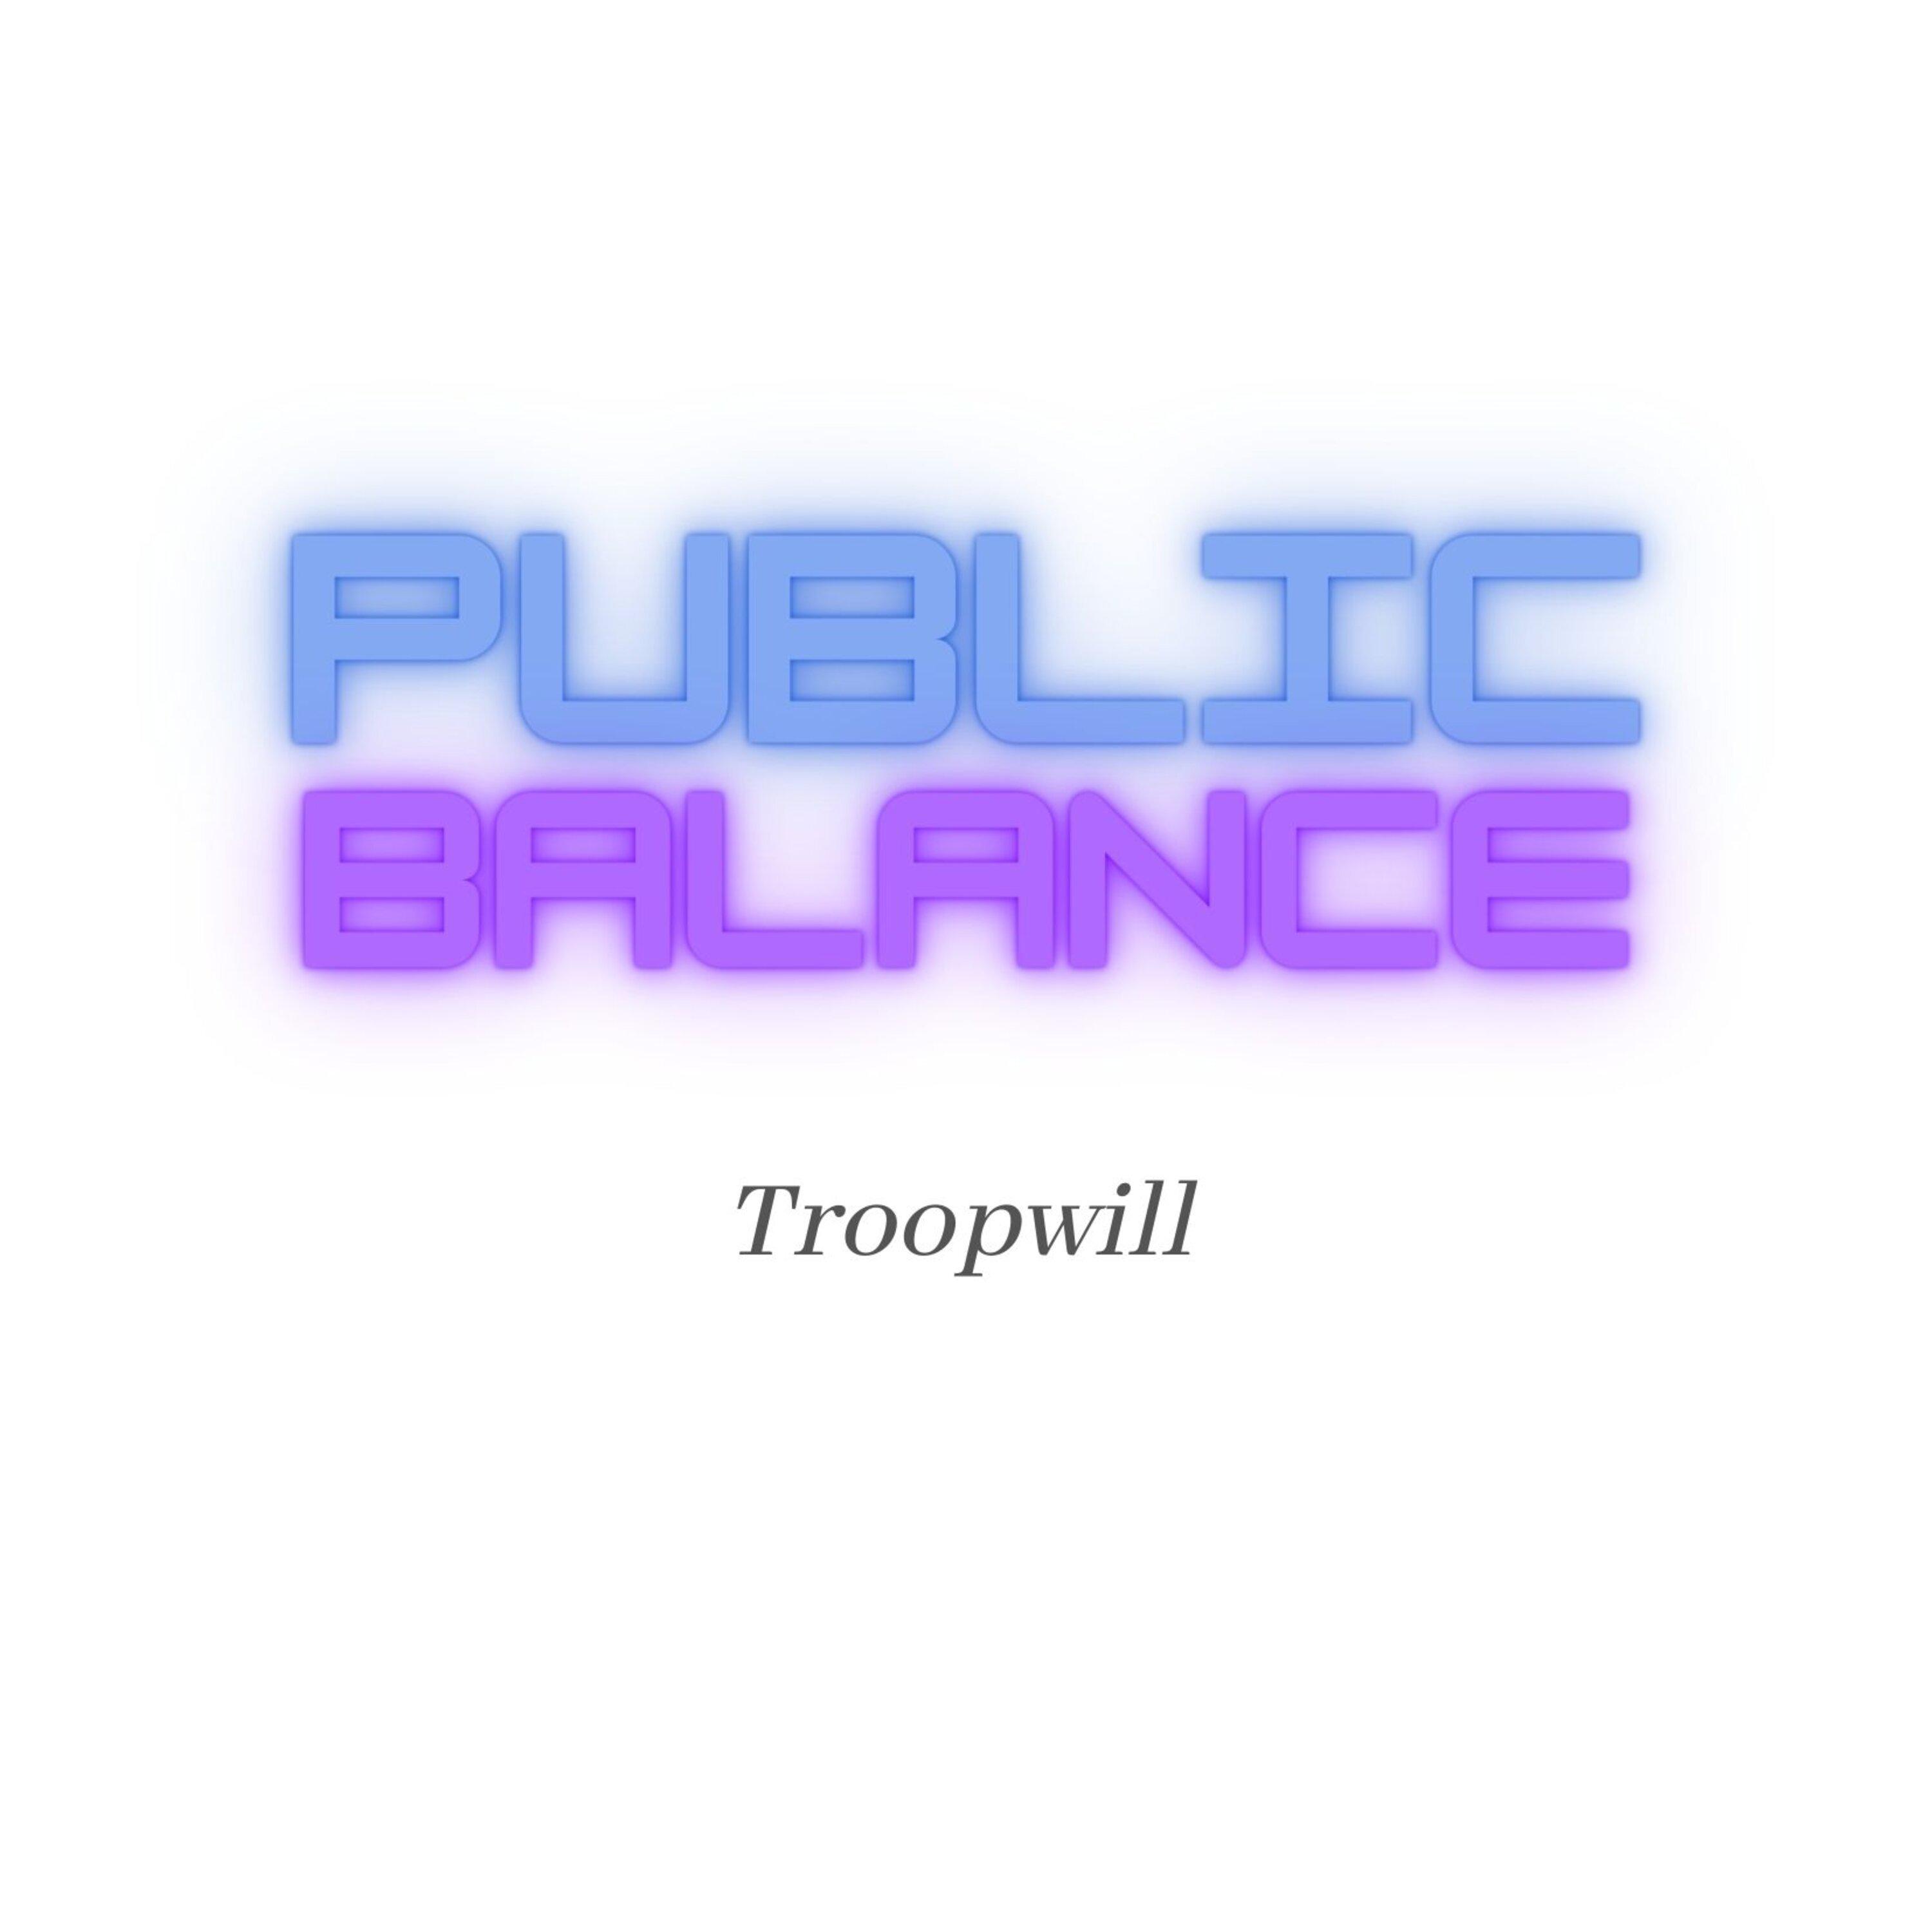 Troopwill - Desert Project